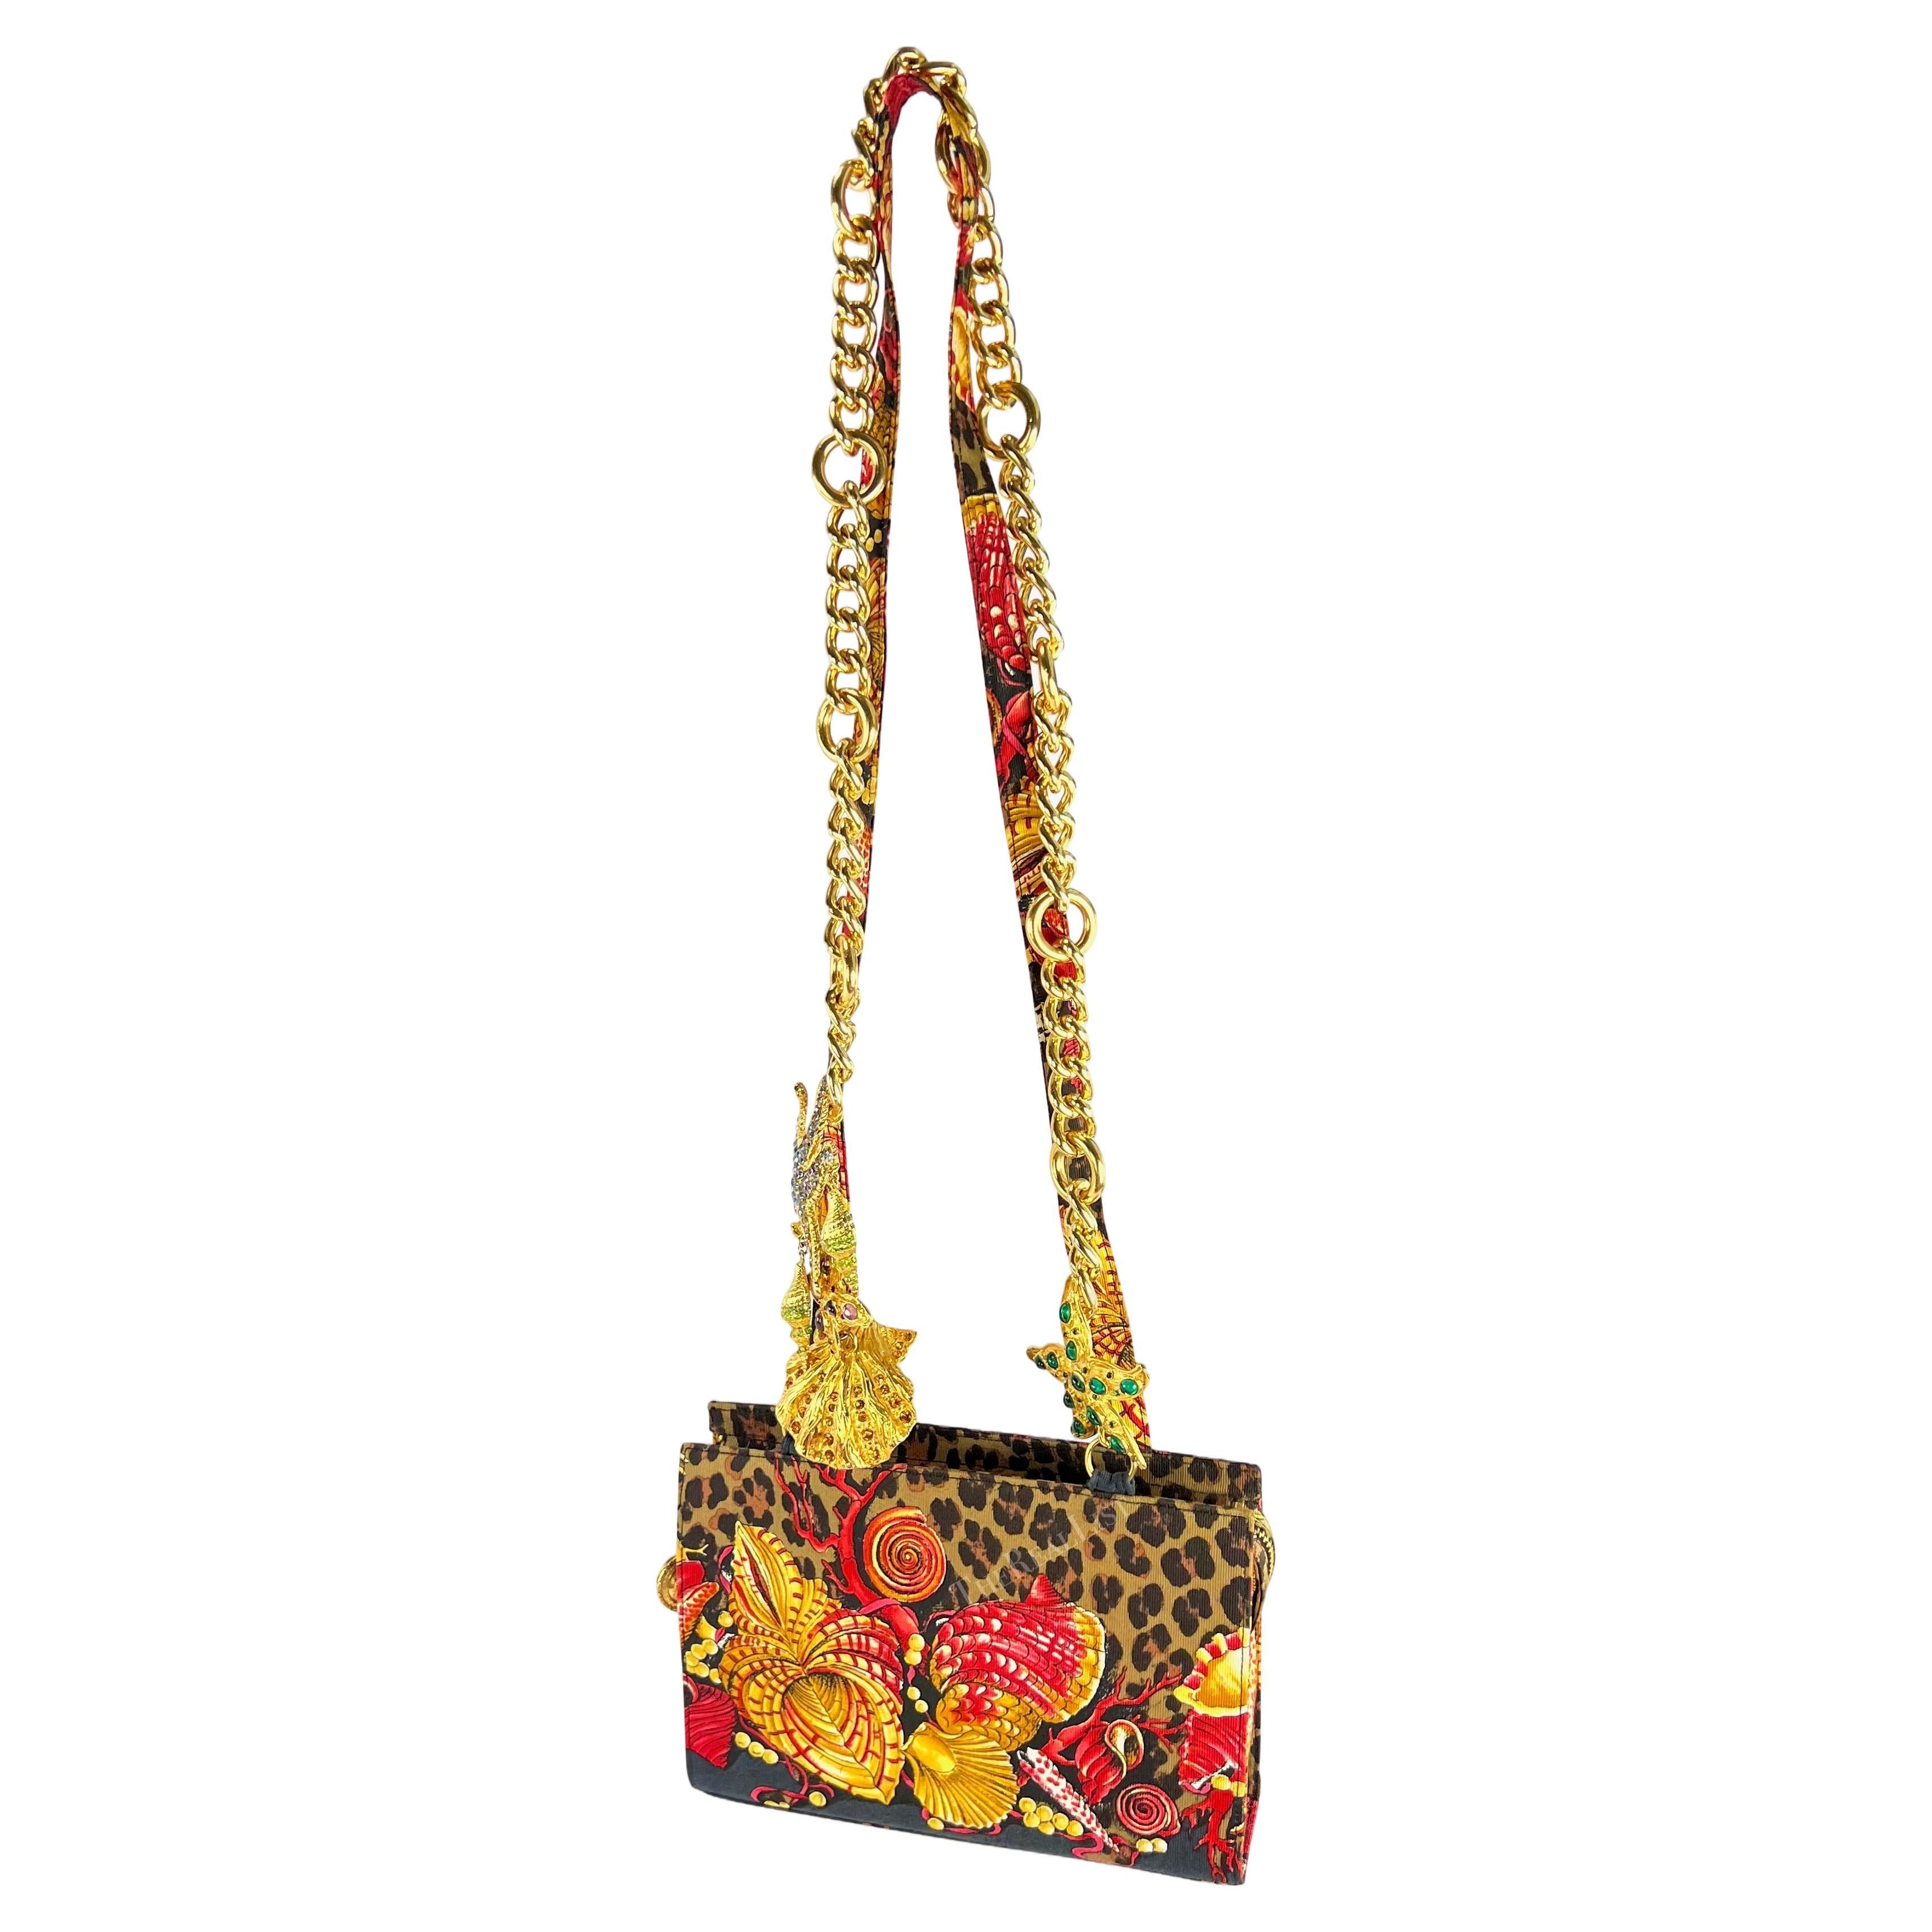 S/S 1992 Gianni Versace Runway Rhinestone Gold Shell Jewel Chain Crossbody Bag  For Sale 4